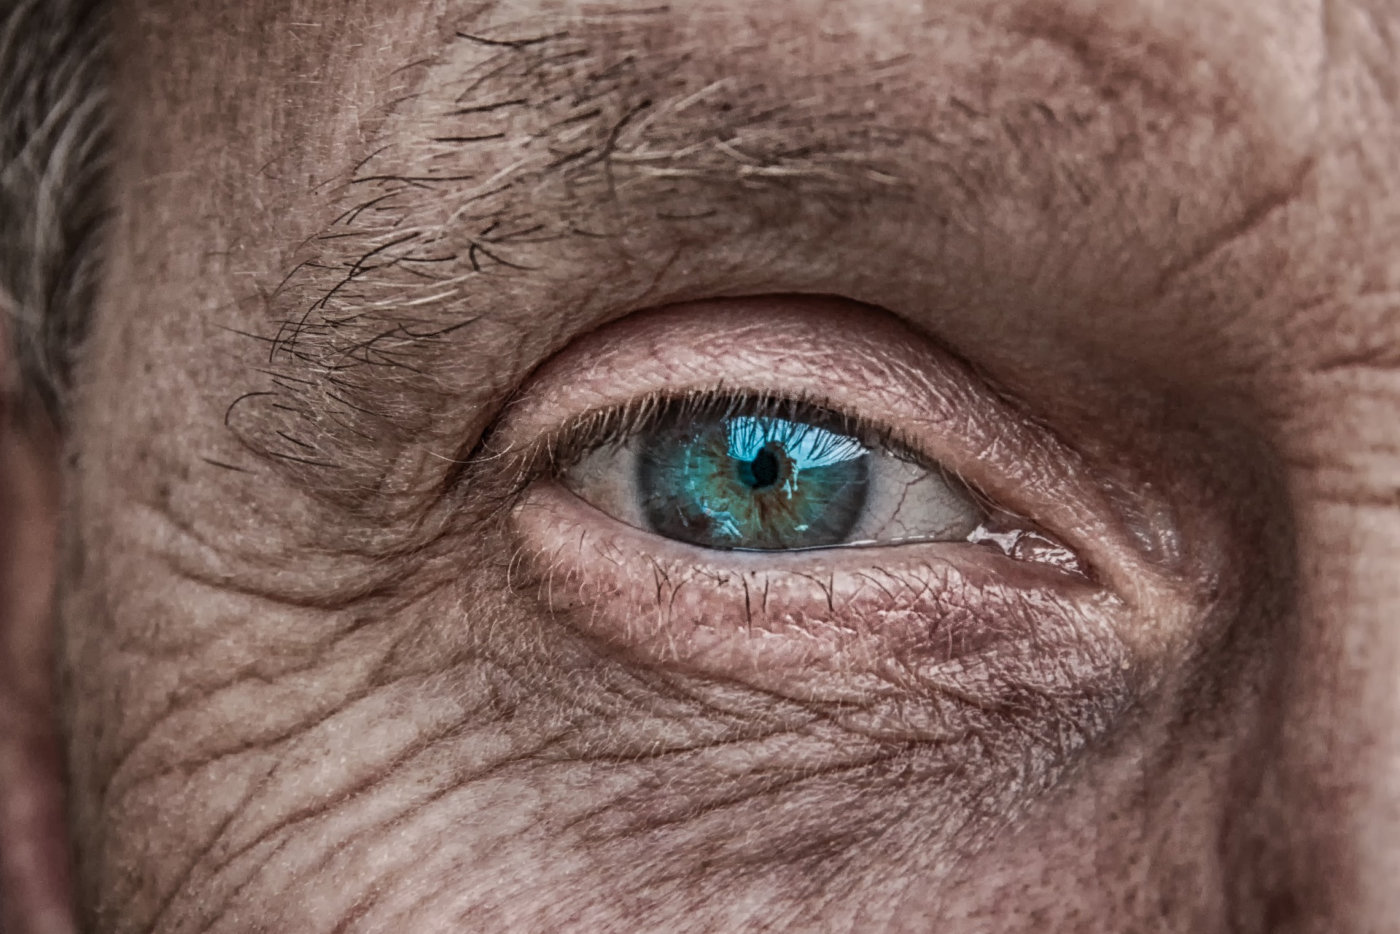 A close-up shot capturing the blue eyes of a senior man